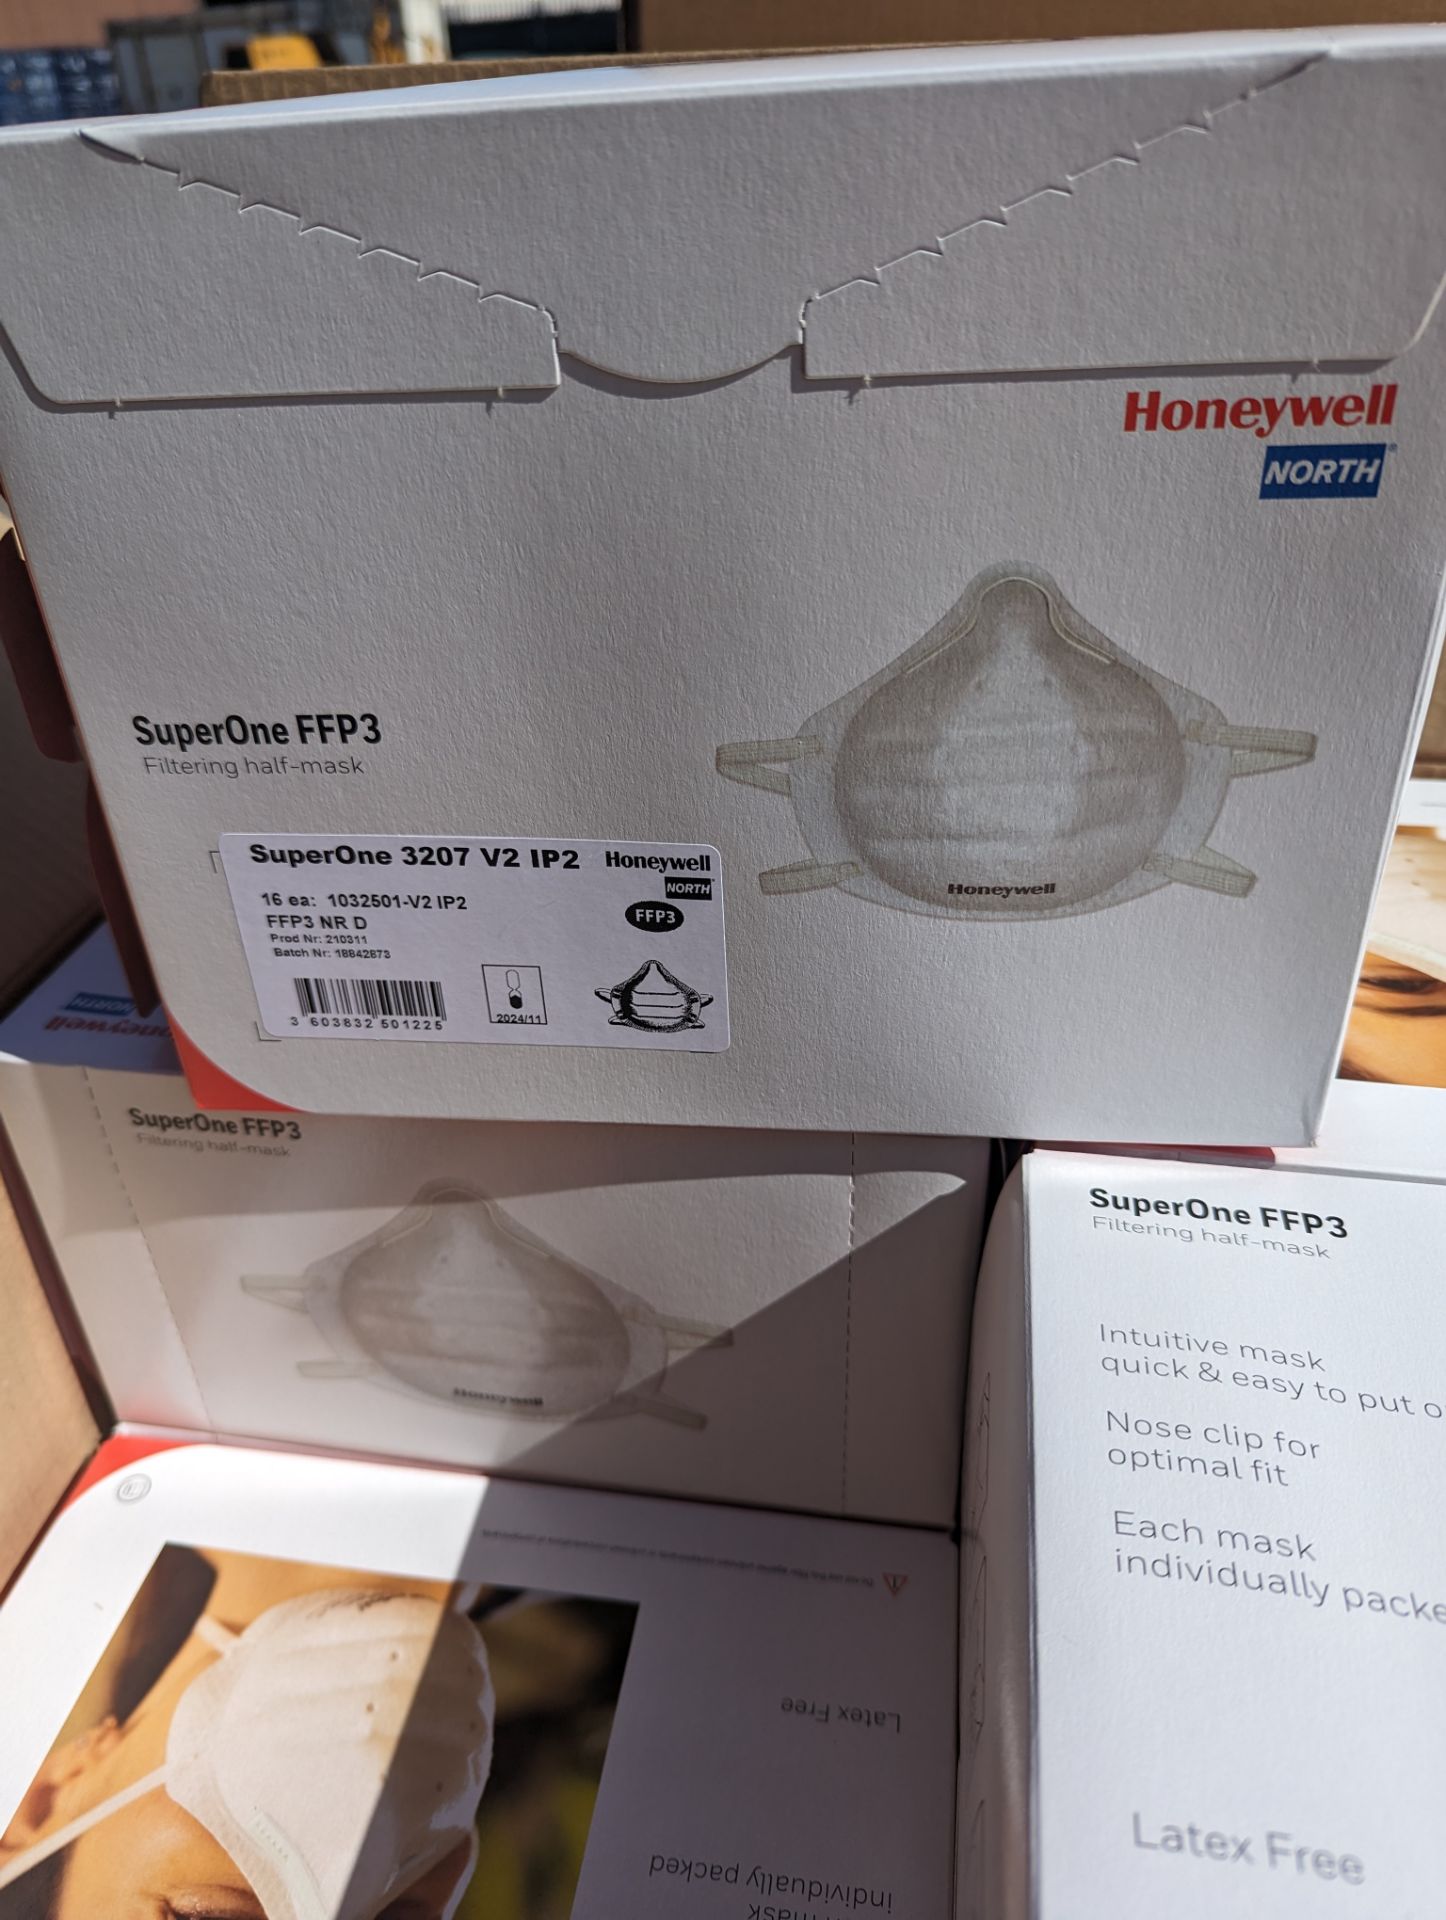 4x Boxes Honeywell SuperOne V2 ip2 FFP3 Filtering Masks - Image 2 of 3